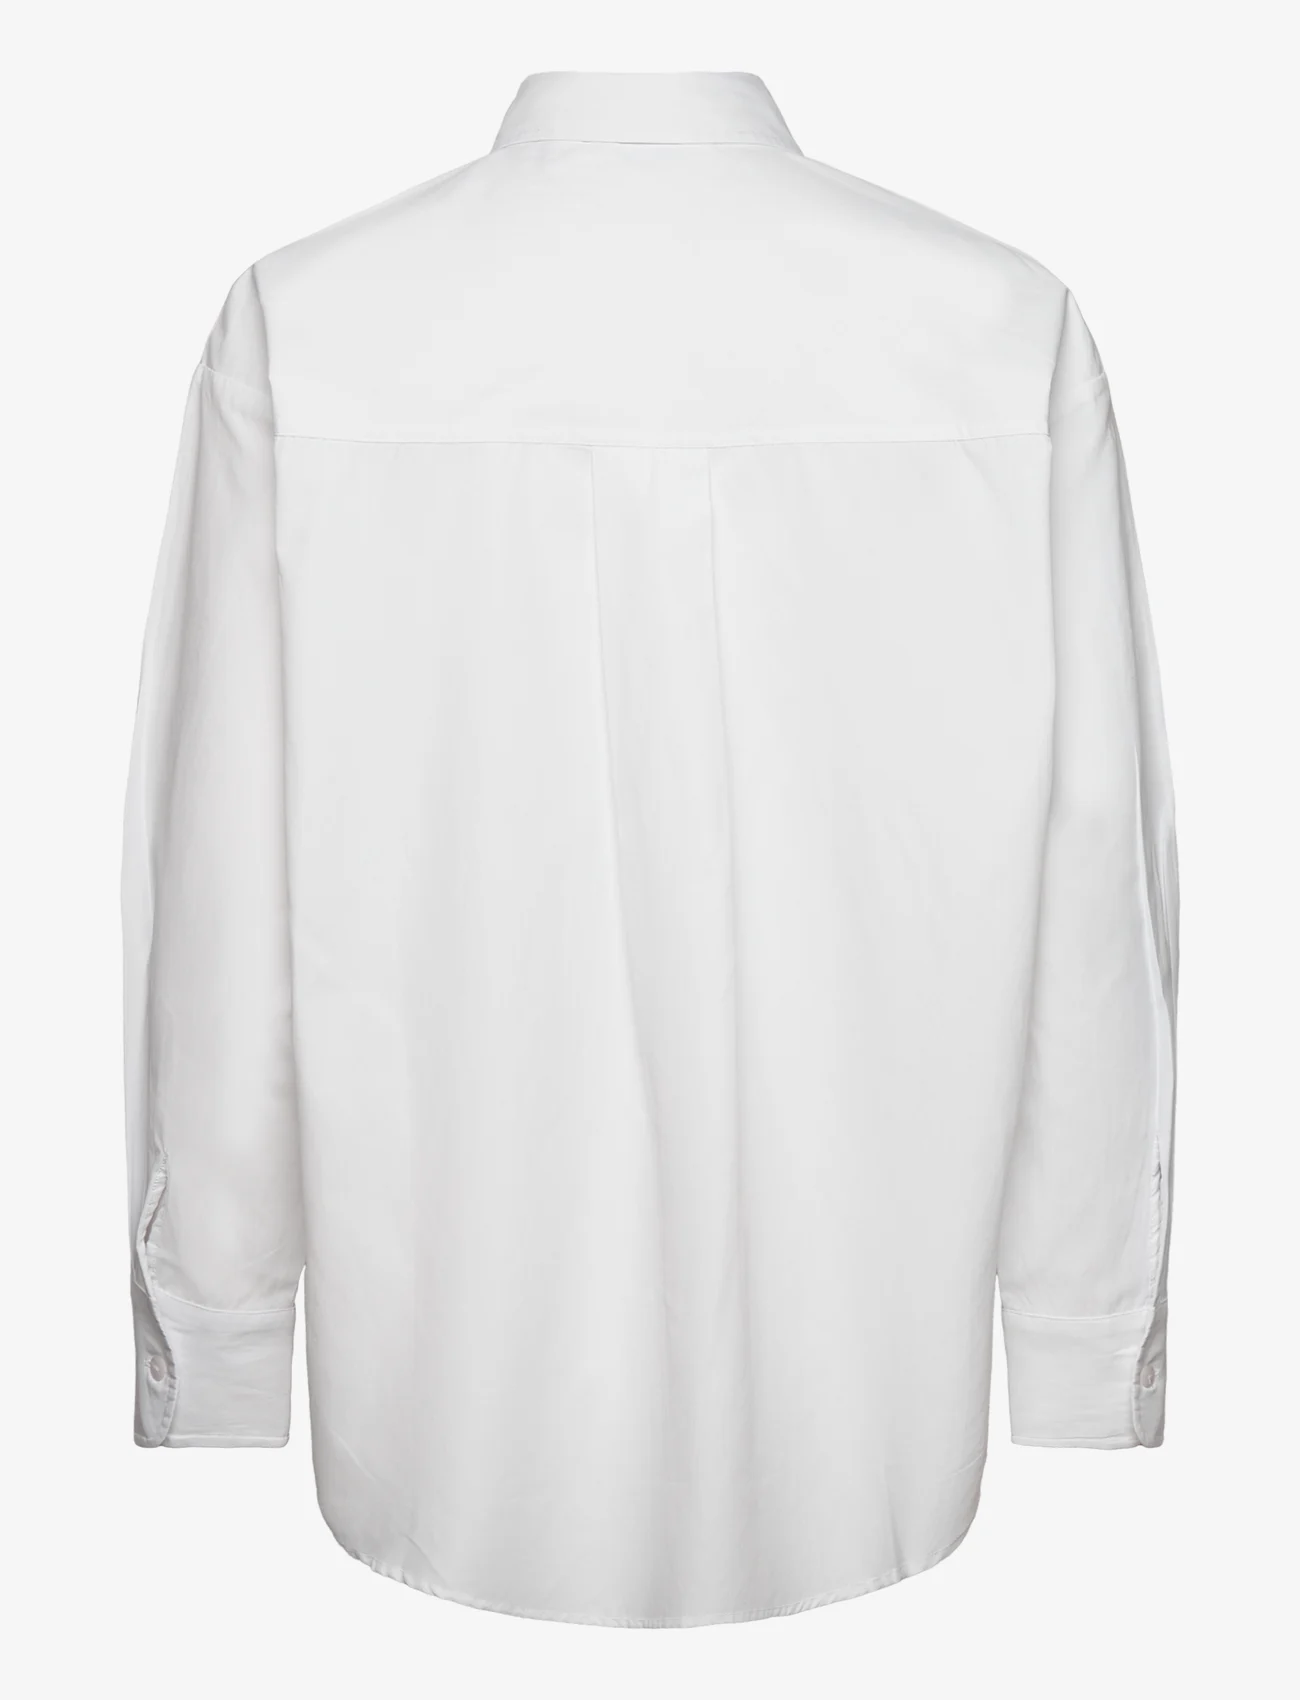 b.young - BYFENTO SHIRT 2 - - pitkähihaiset paidat - optical white - 1